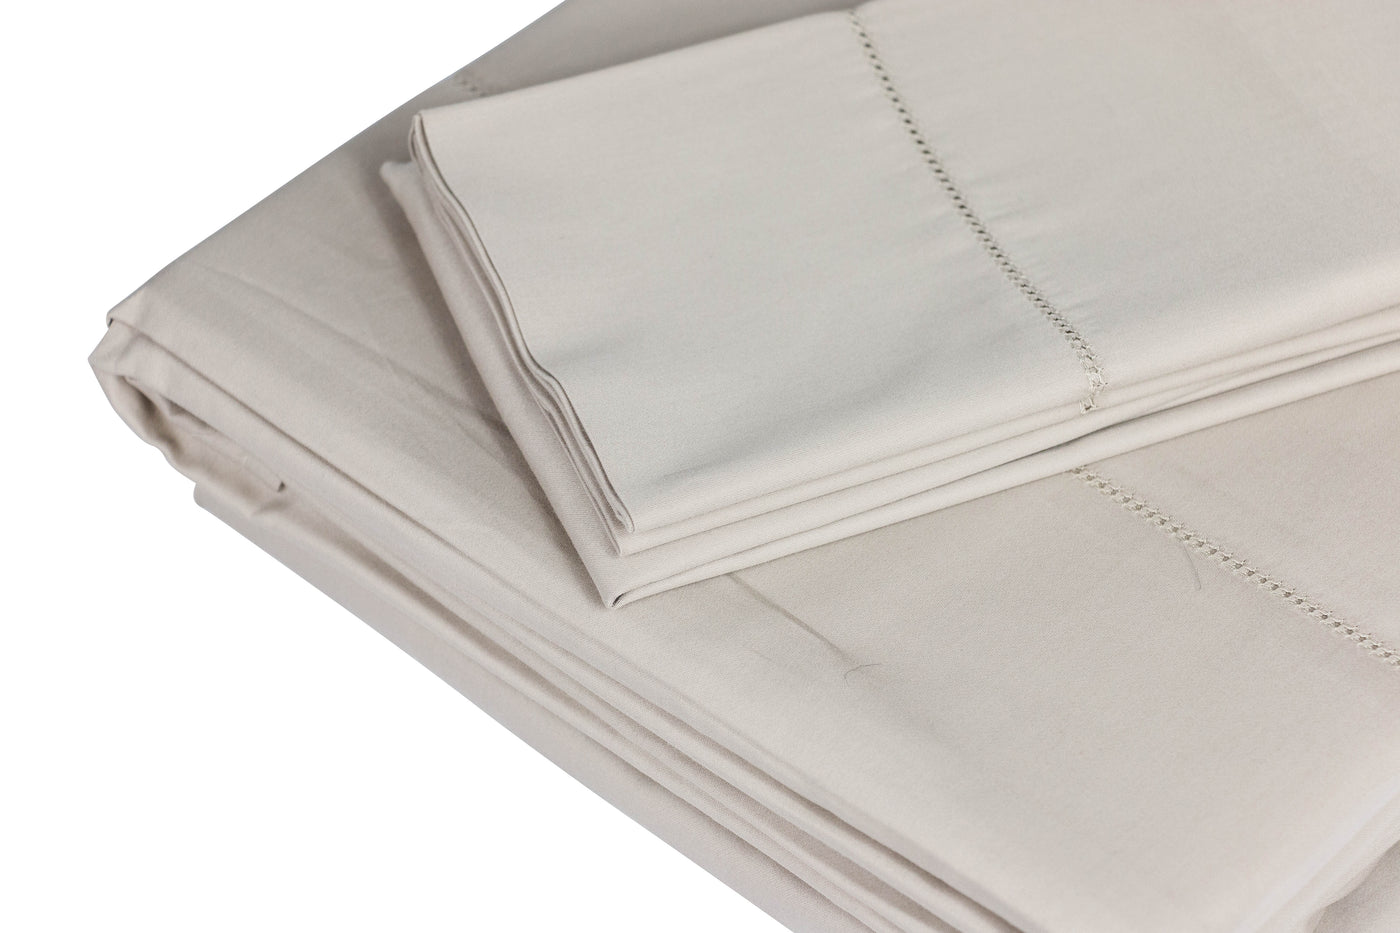 St. Pierre Cotton-Sateen Luxurious European Pillowcase Pair